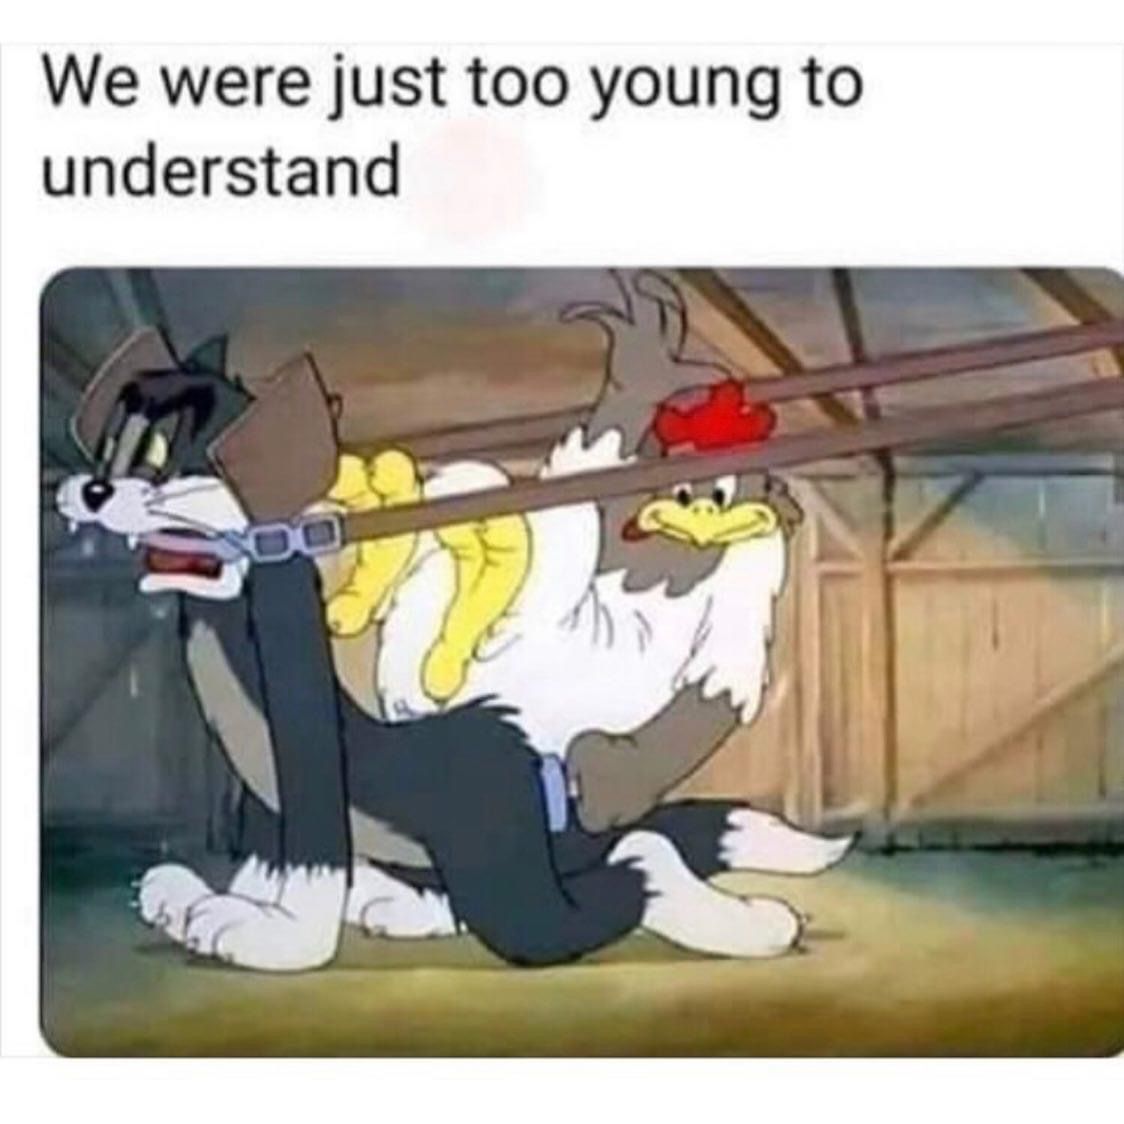 My generation’s cartoons were wild